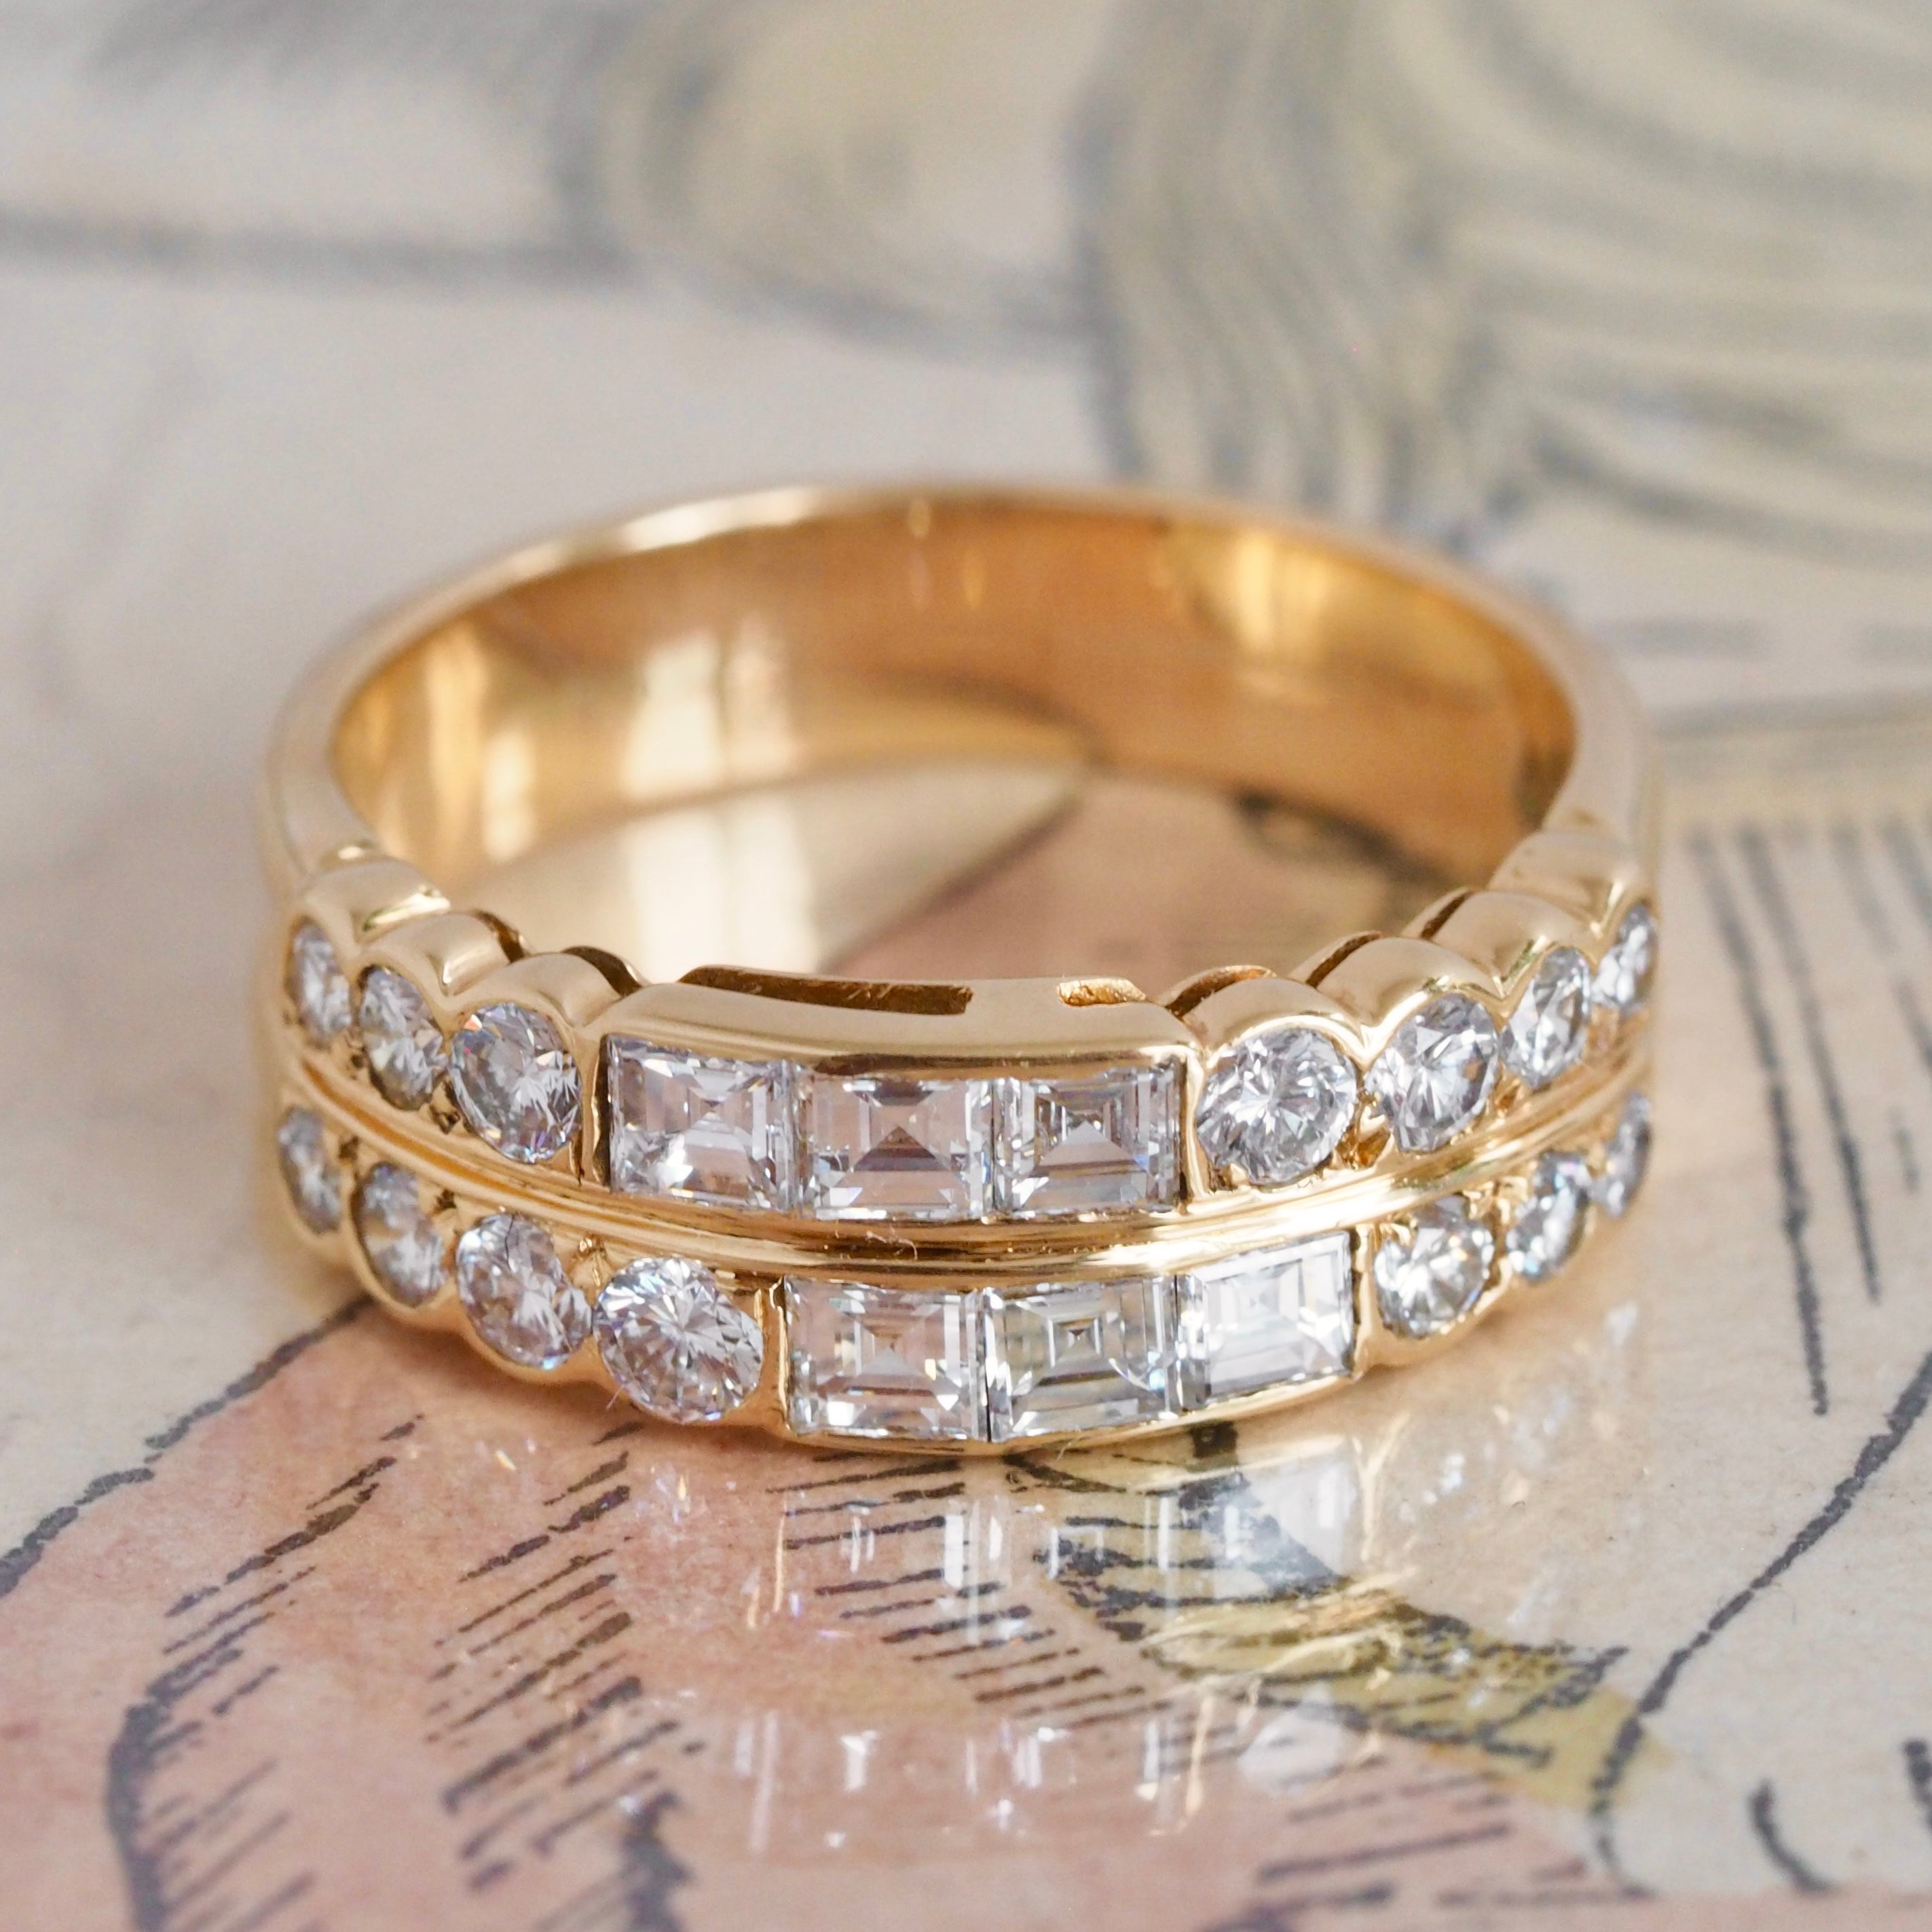 Vintage French 18k Gold Diamond Ring